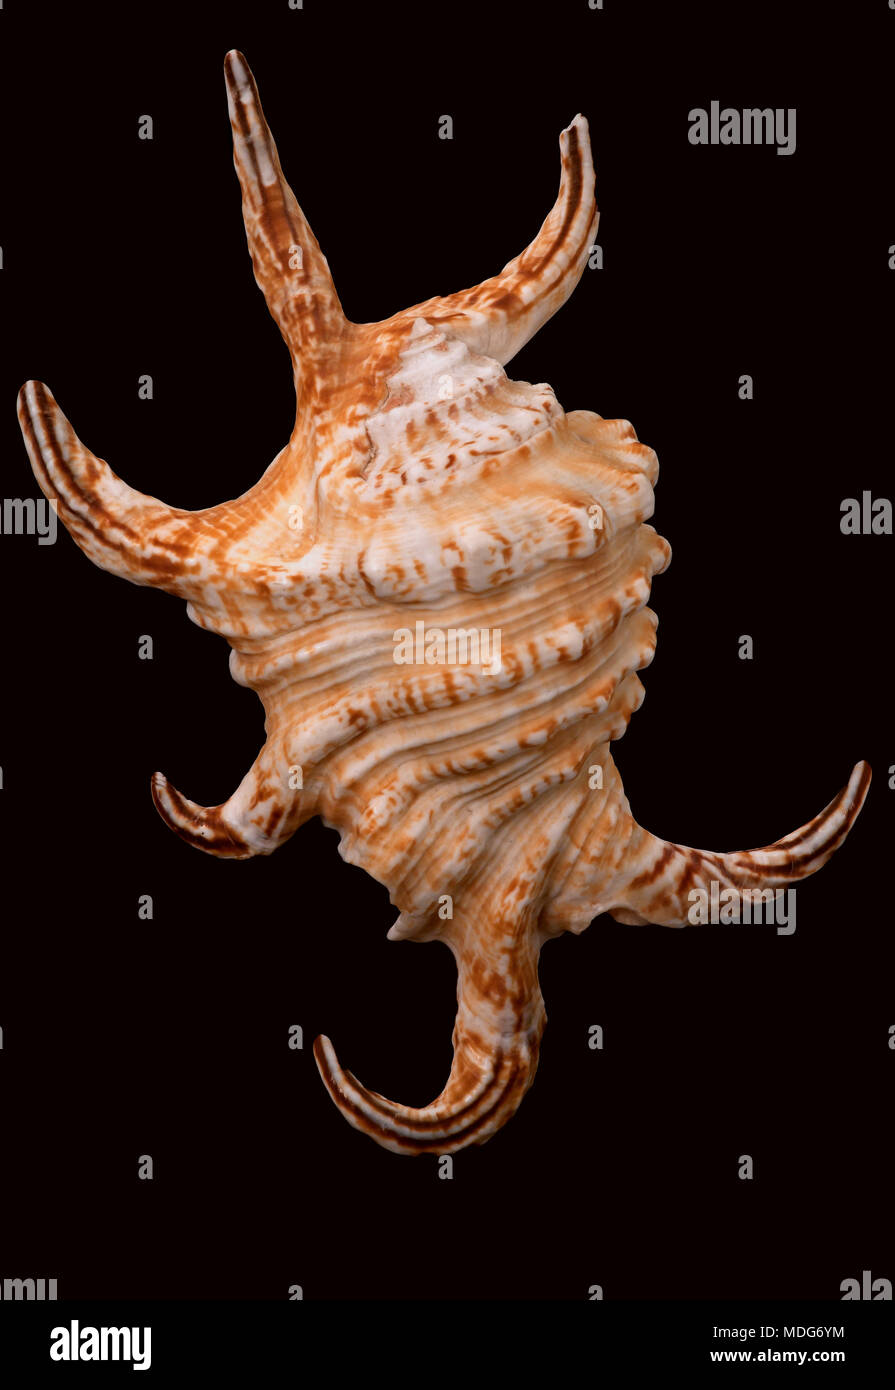 Seashell of Arthritic spider conch (Harpago chiragra arthritica), Malacology collection, Spain, Europe Stock Photo